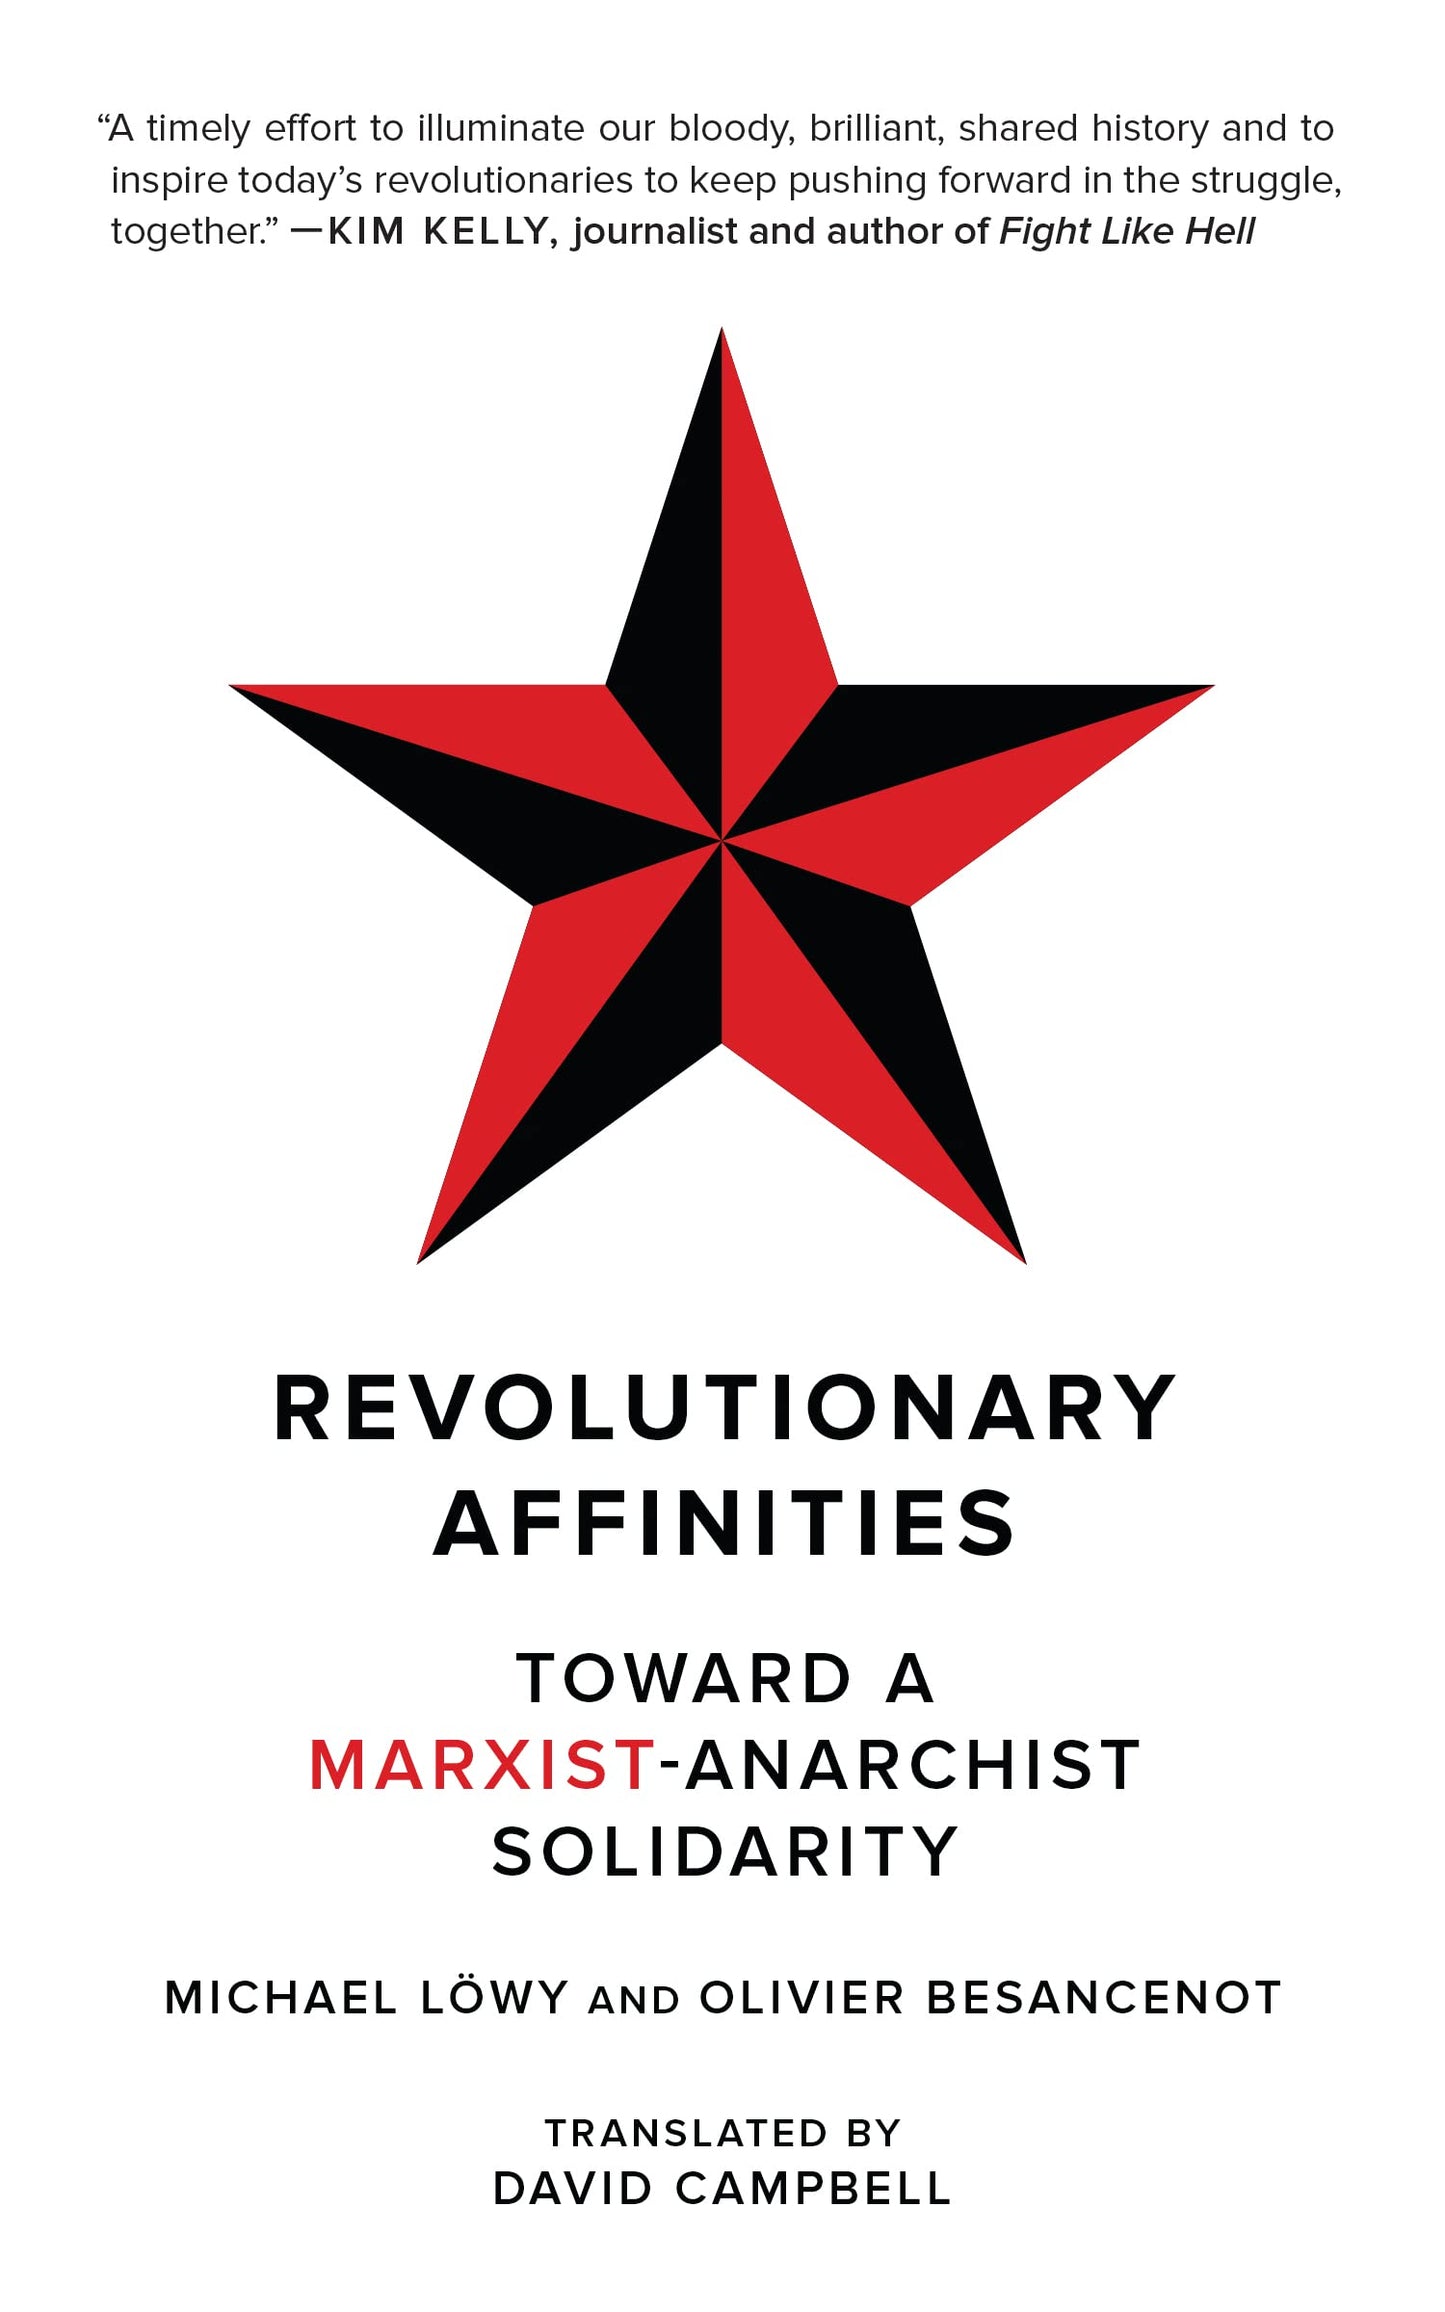 Revolutionary Affinities: Toward a Marxist-Anarchist Solidarity